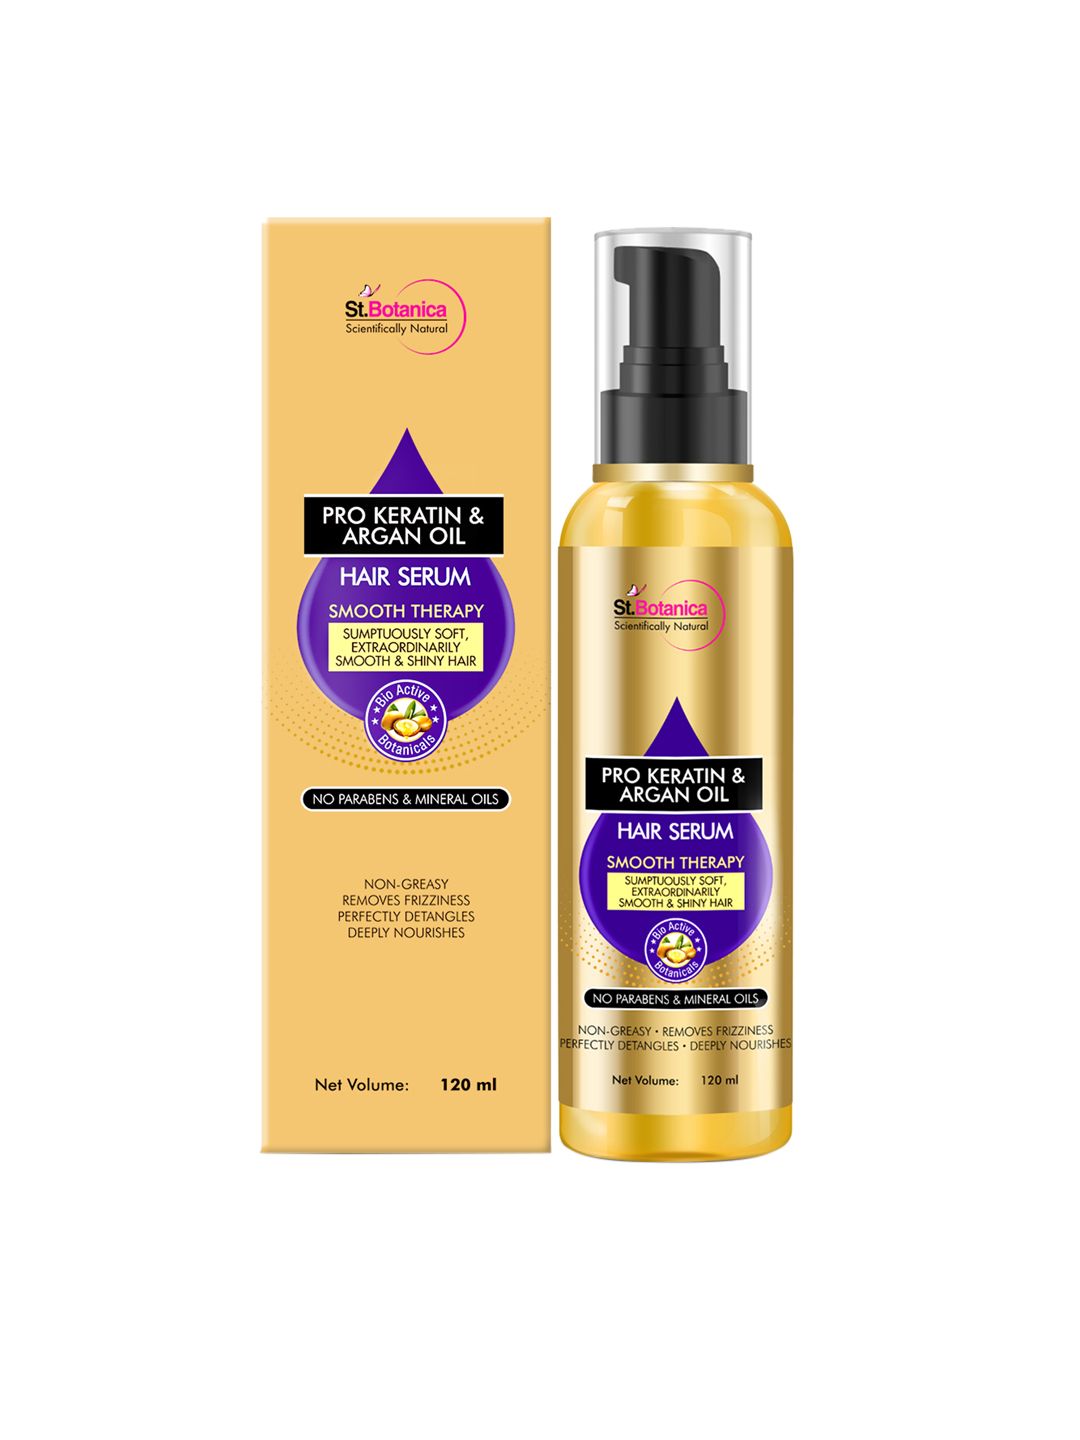 StBotanica Pro Keratin & Argan Oil Smooth Therapy Hair Serum 120ml Price in India